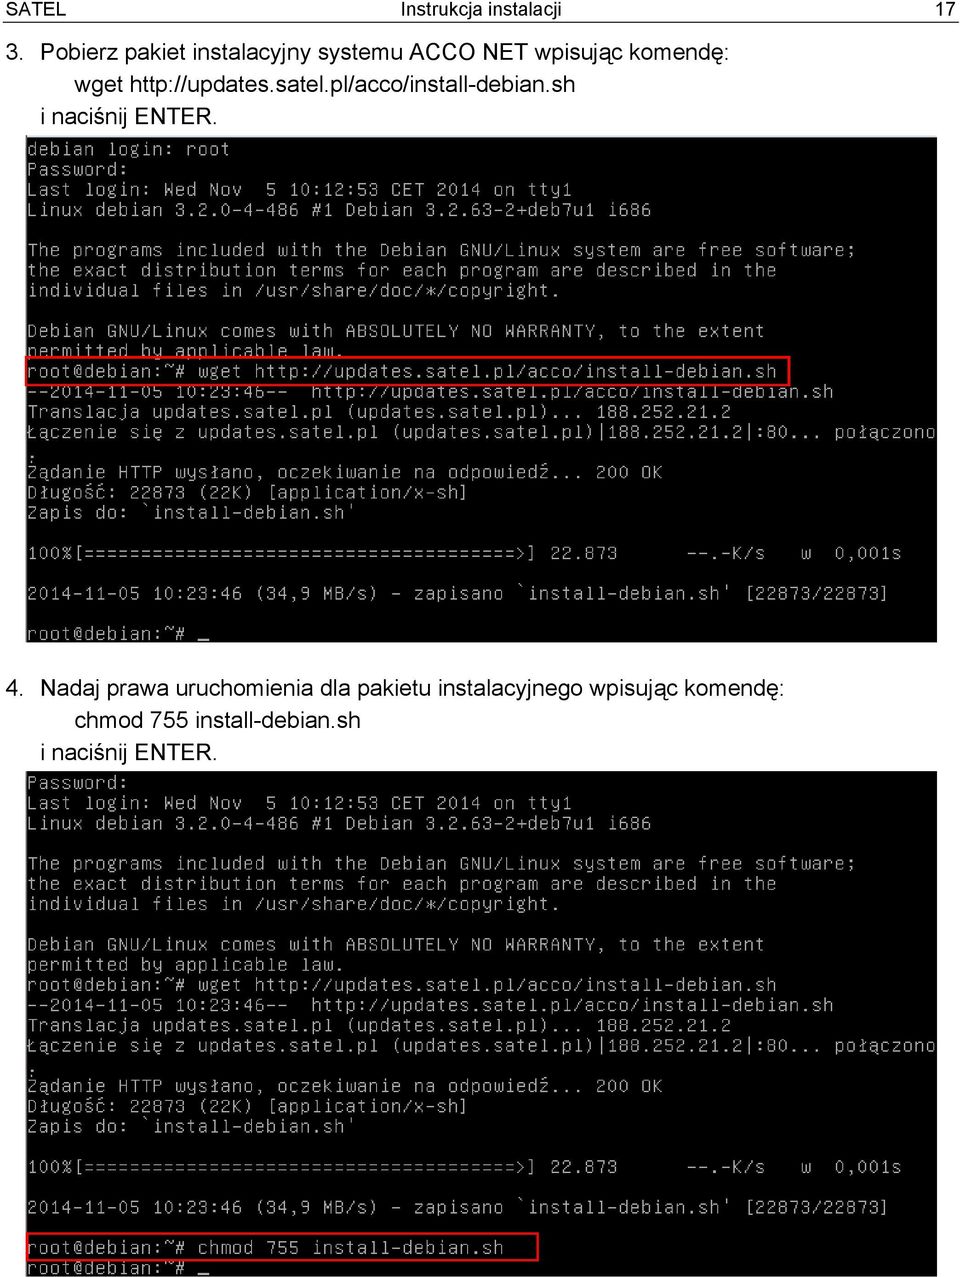 http://updates.satel.pl/acco/install-debian.sh i naciśnij ENTER. 4.